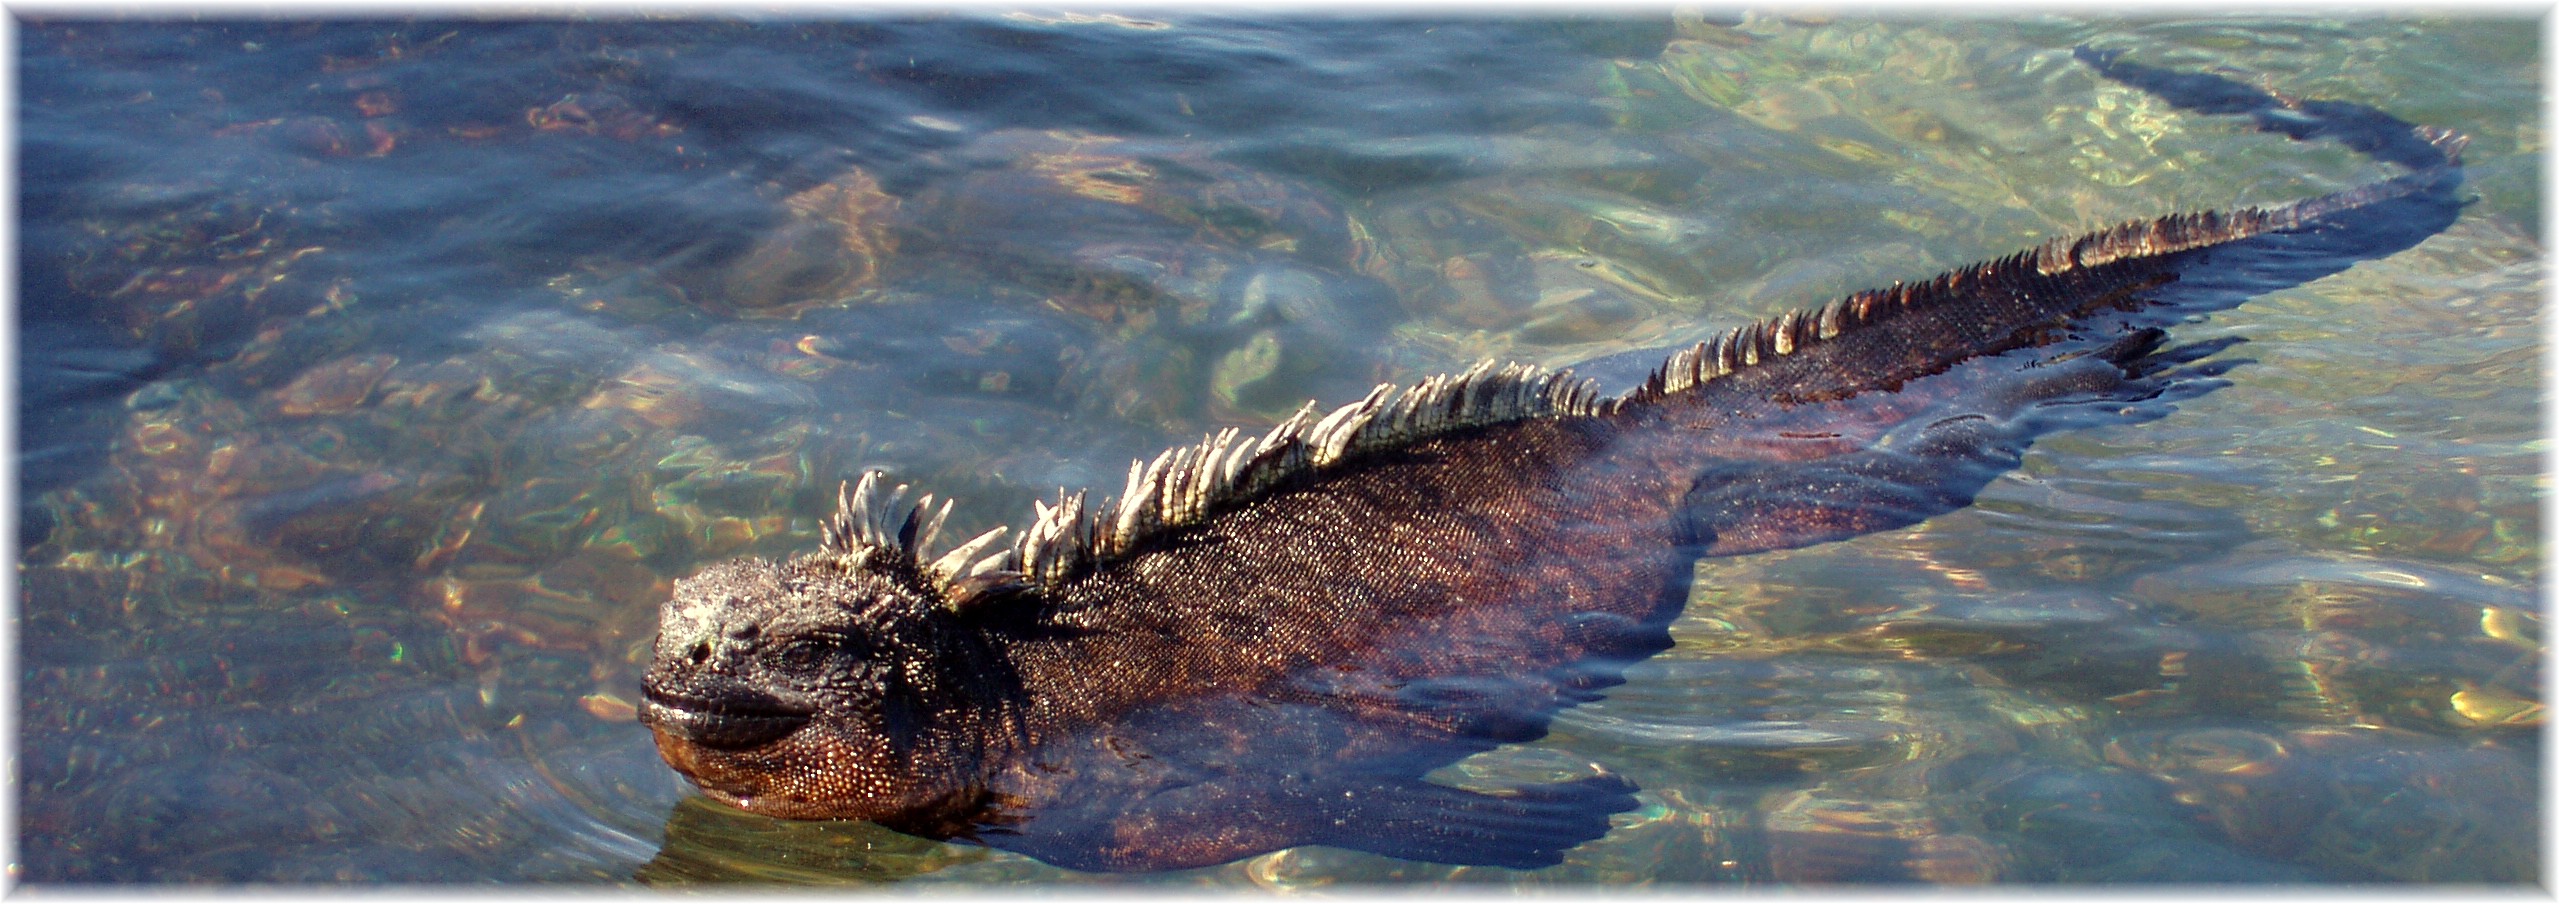 Galapagos Islands-Marine Iguana swimming